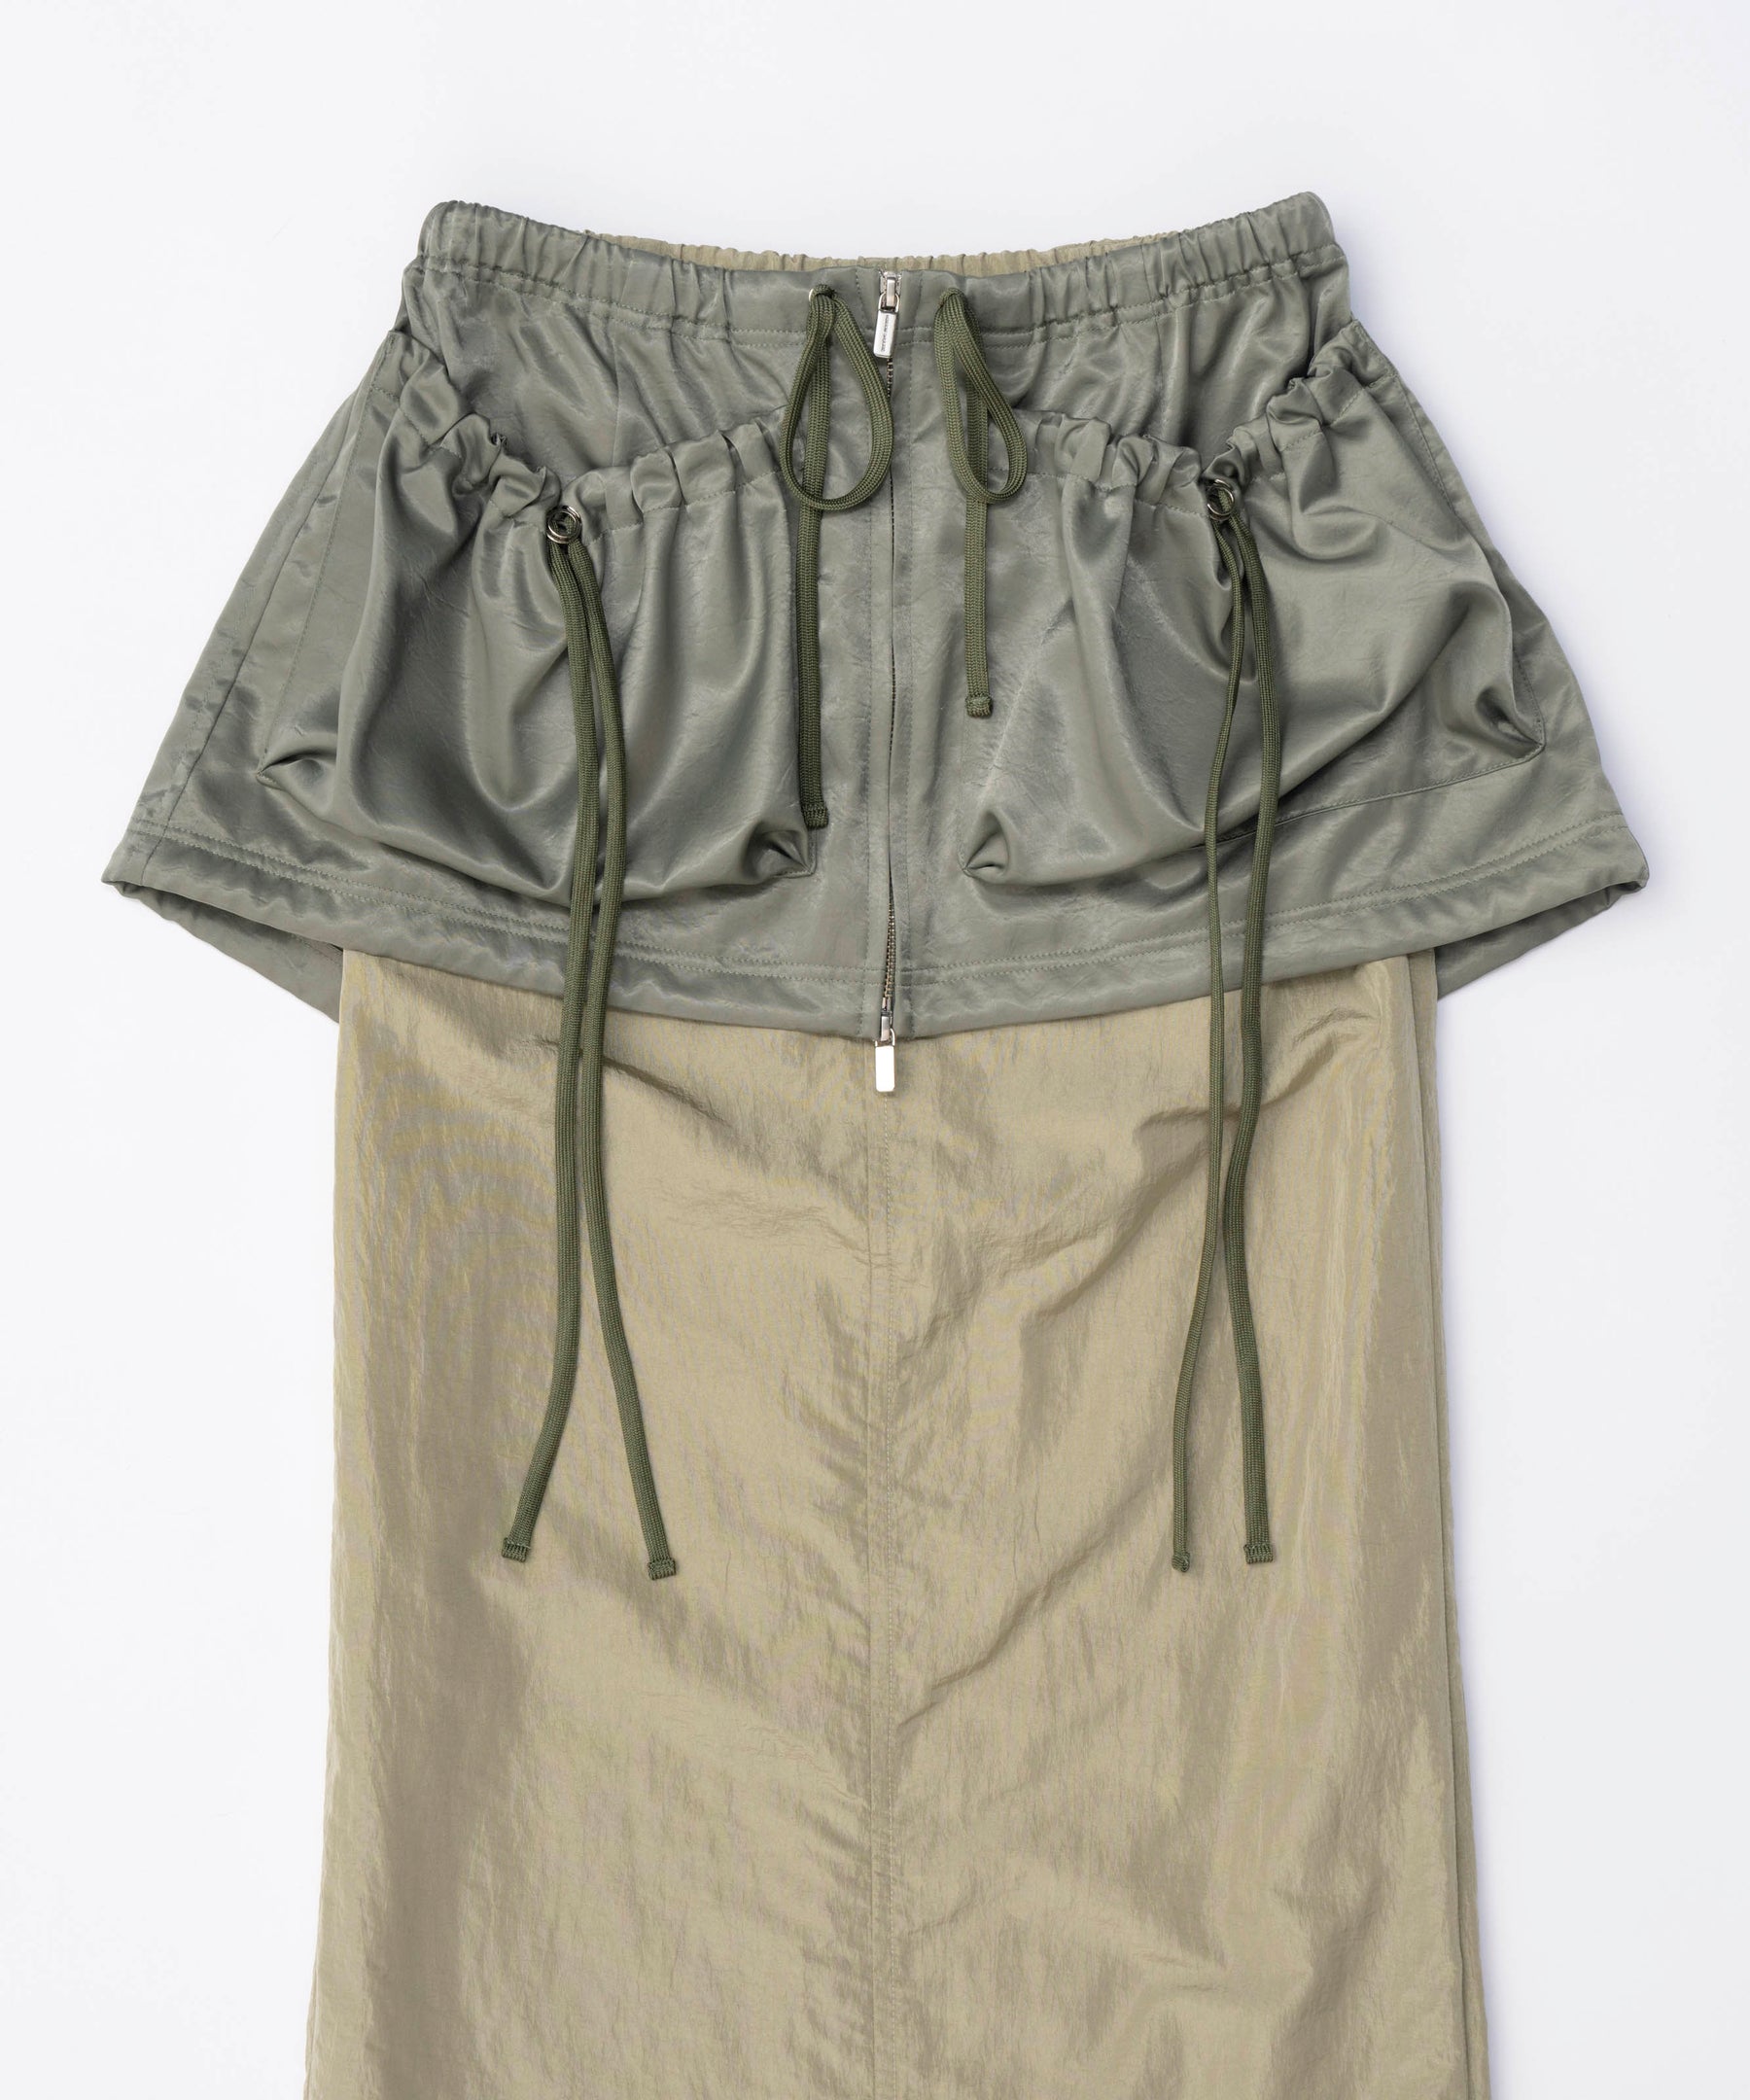 Pocket Layered Tight Skirt